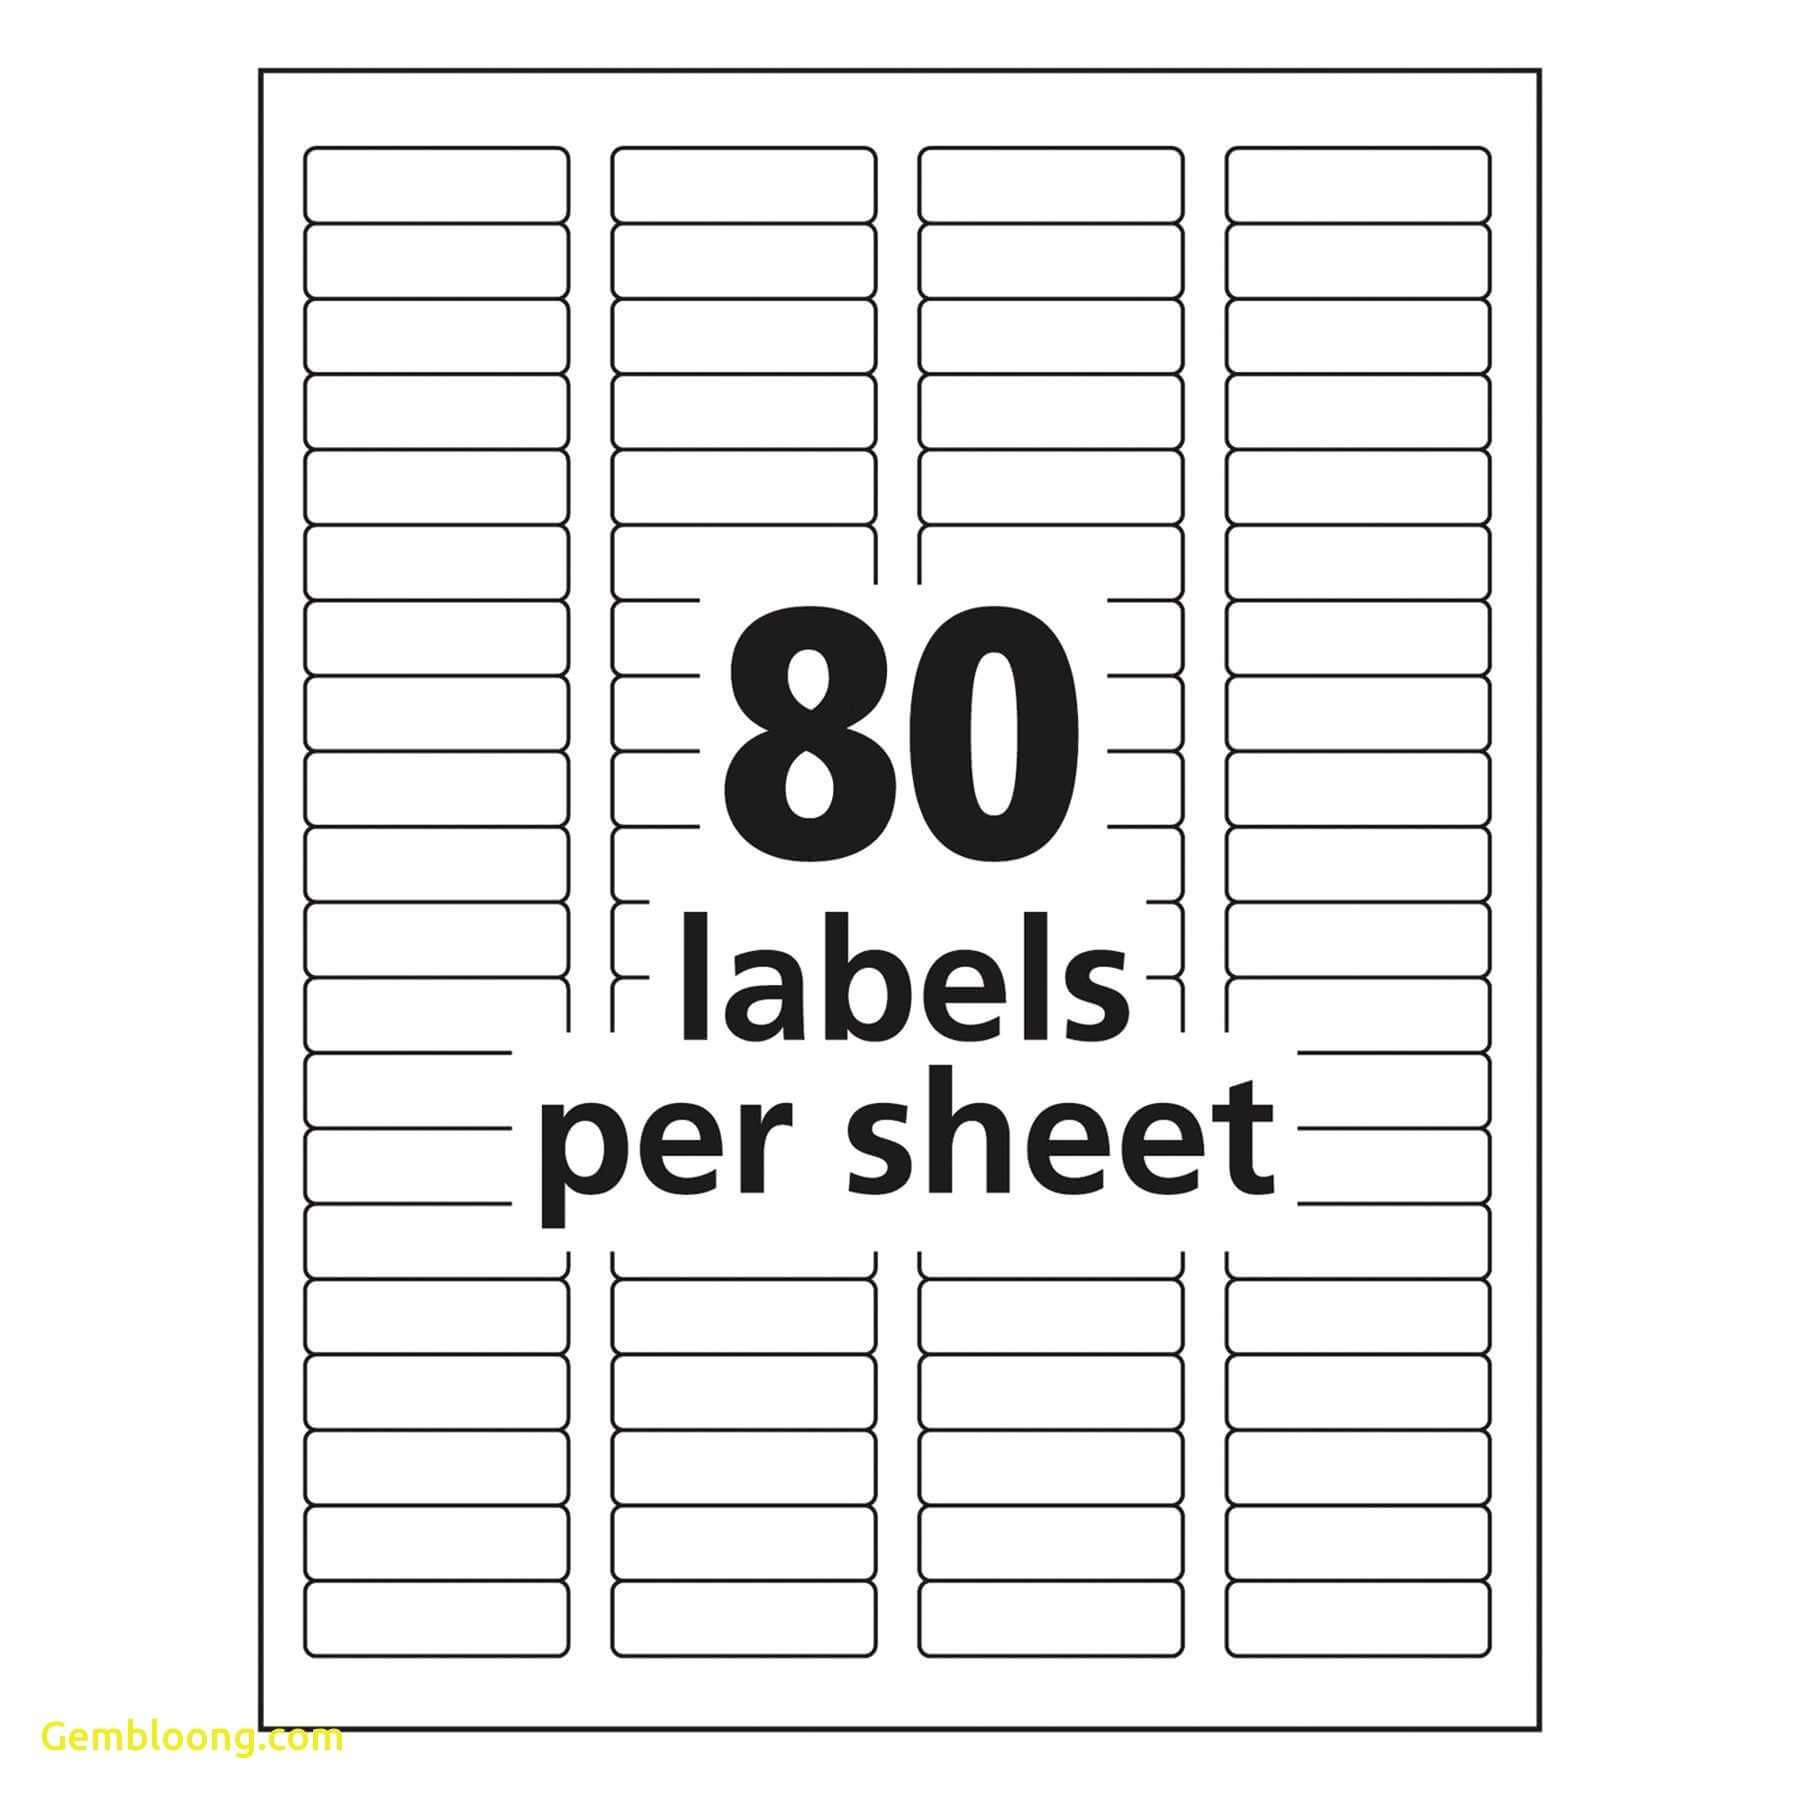 Mailing Label Templates 30 Per Sheet | Aparsuparjo With Regard To 8 Labels Per Sheet Template Word